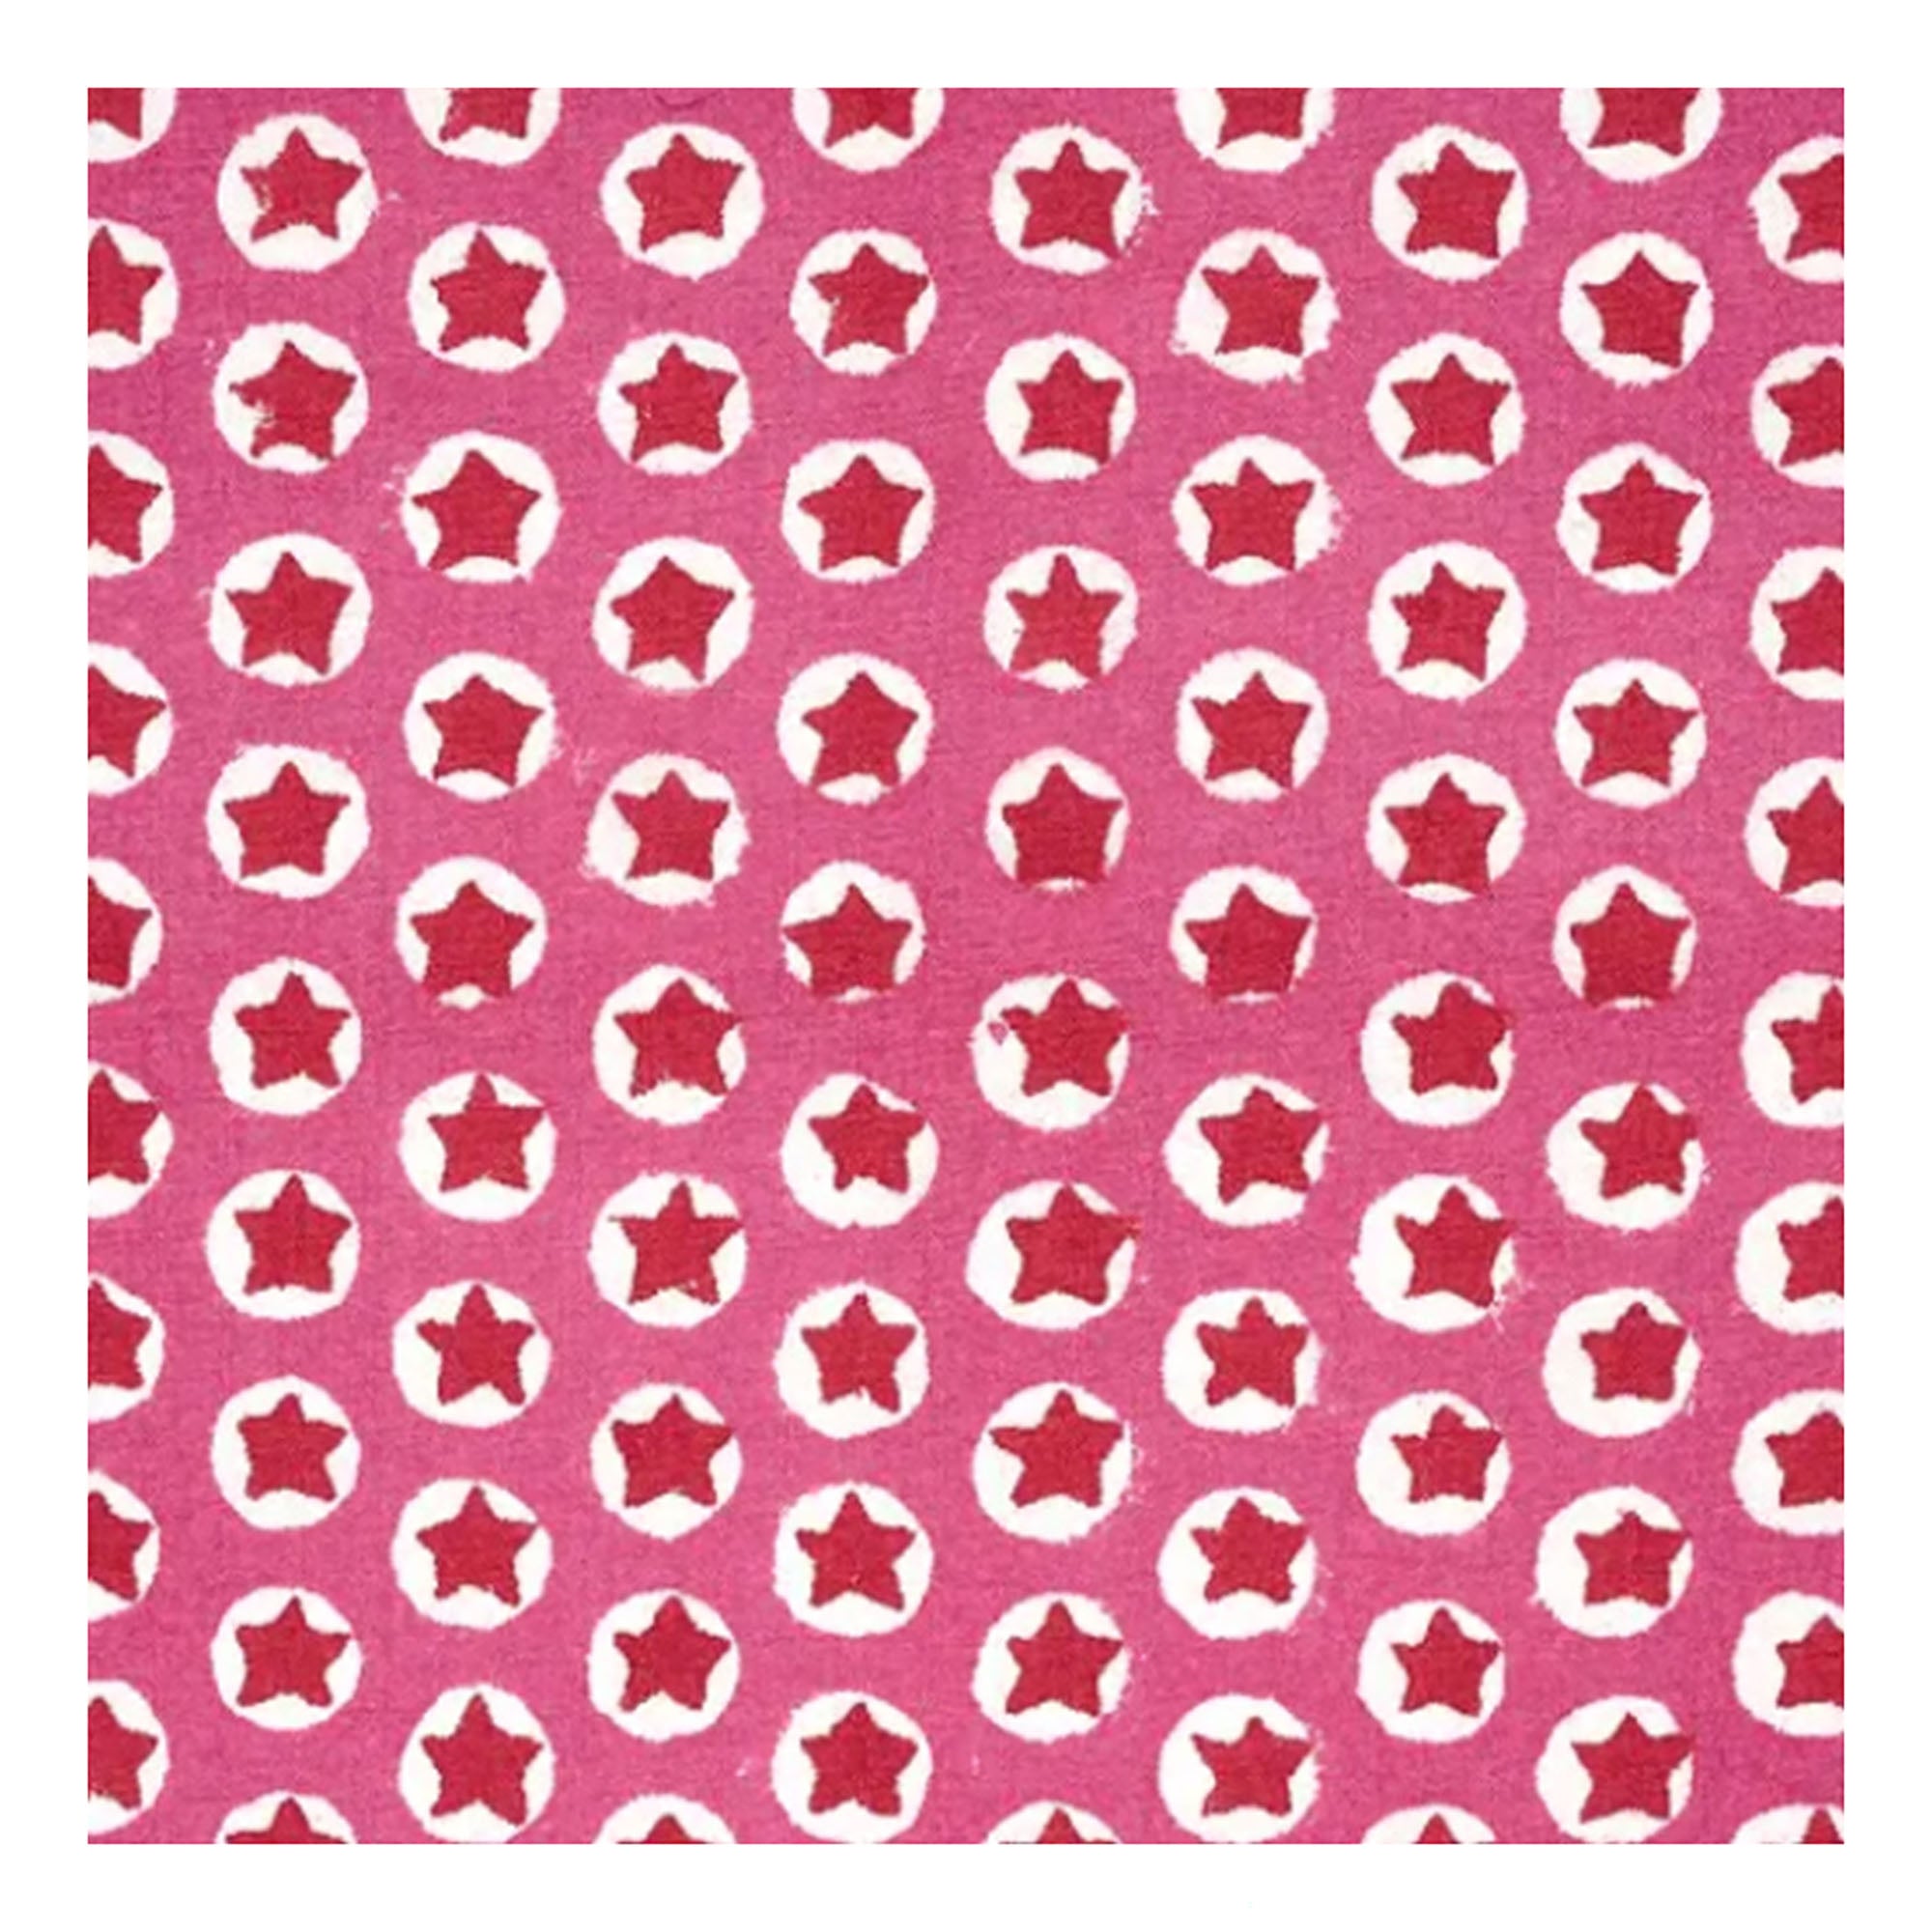 Tuk Tuk Block printed Fabric Cotton Pink